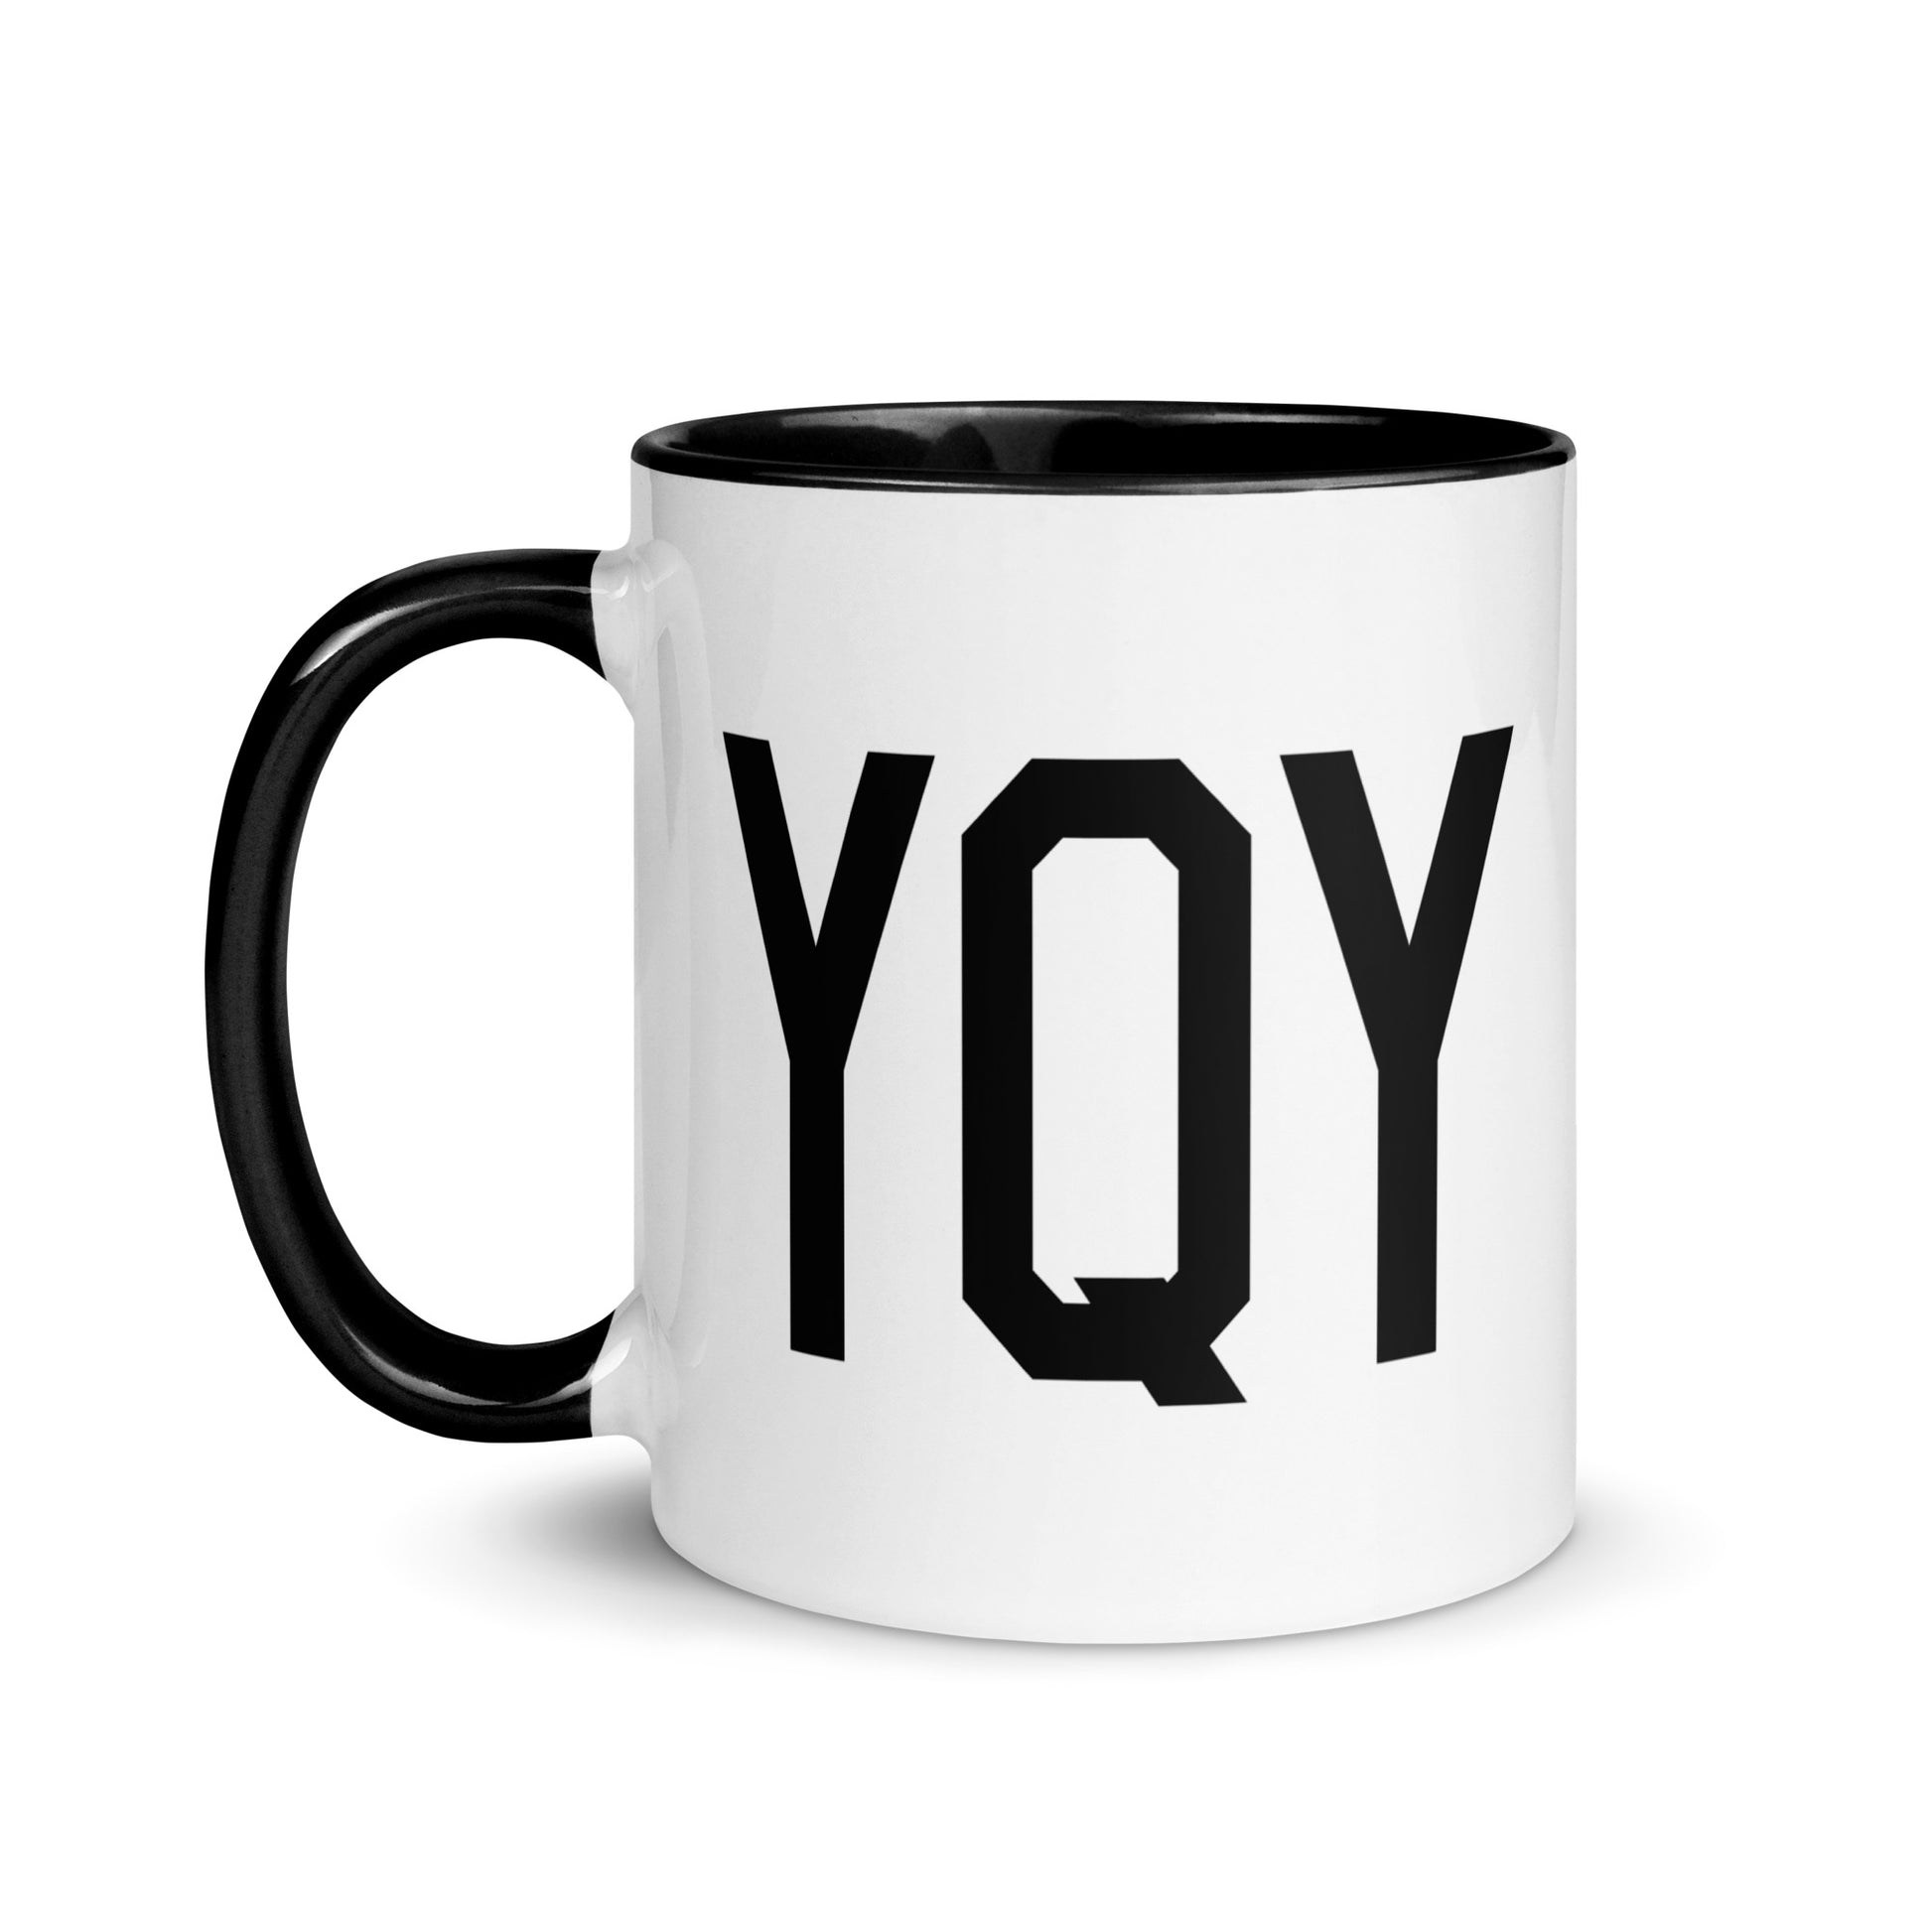 Aviation-Theme Coffee Mug - Black • YQY Sydney • YHM Designs - Image 03